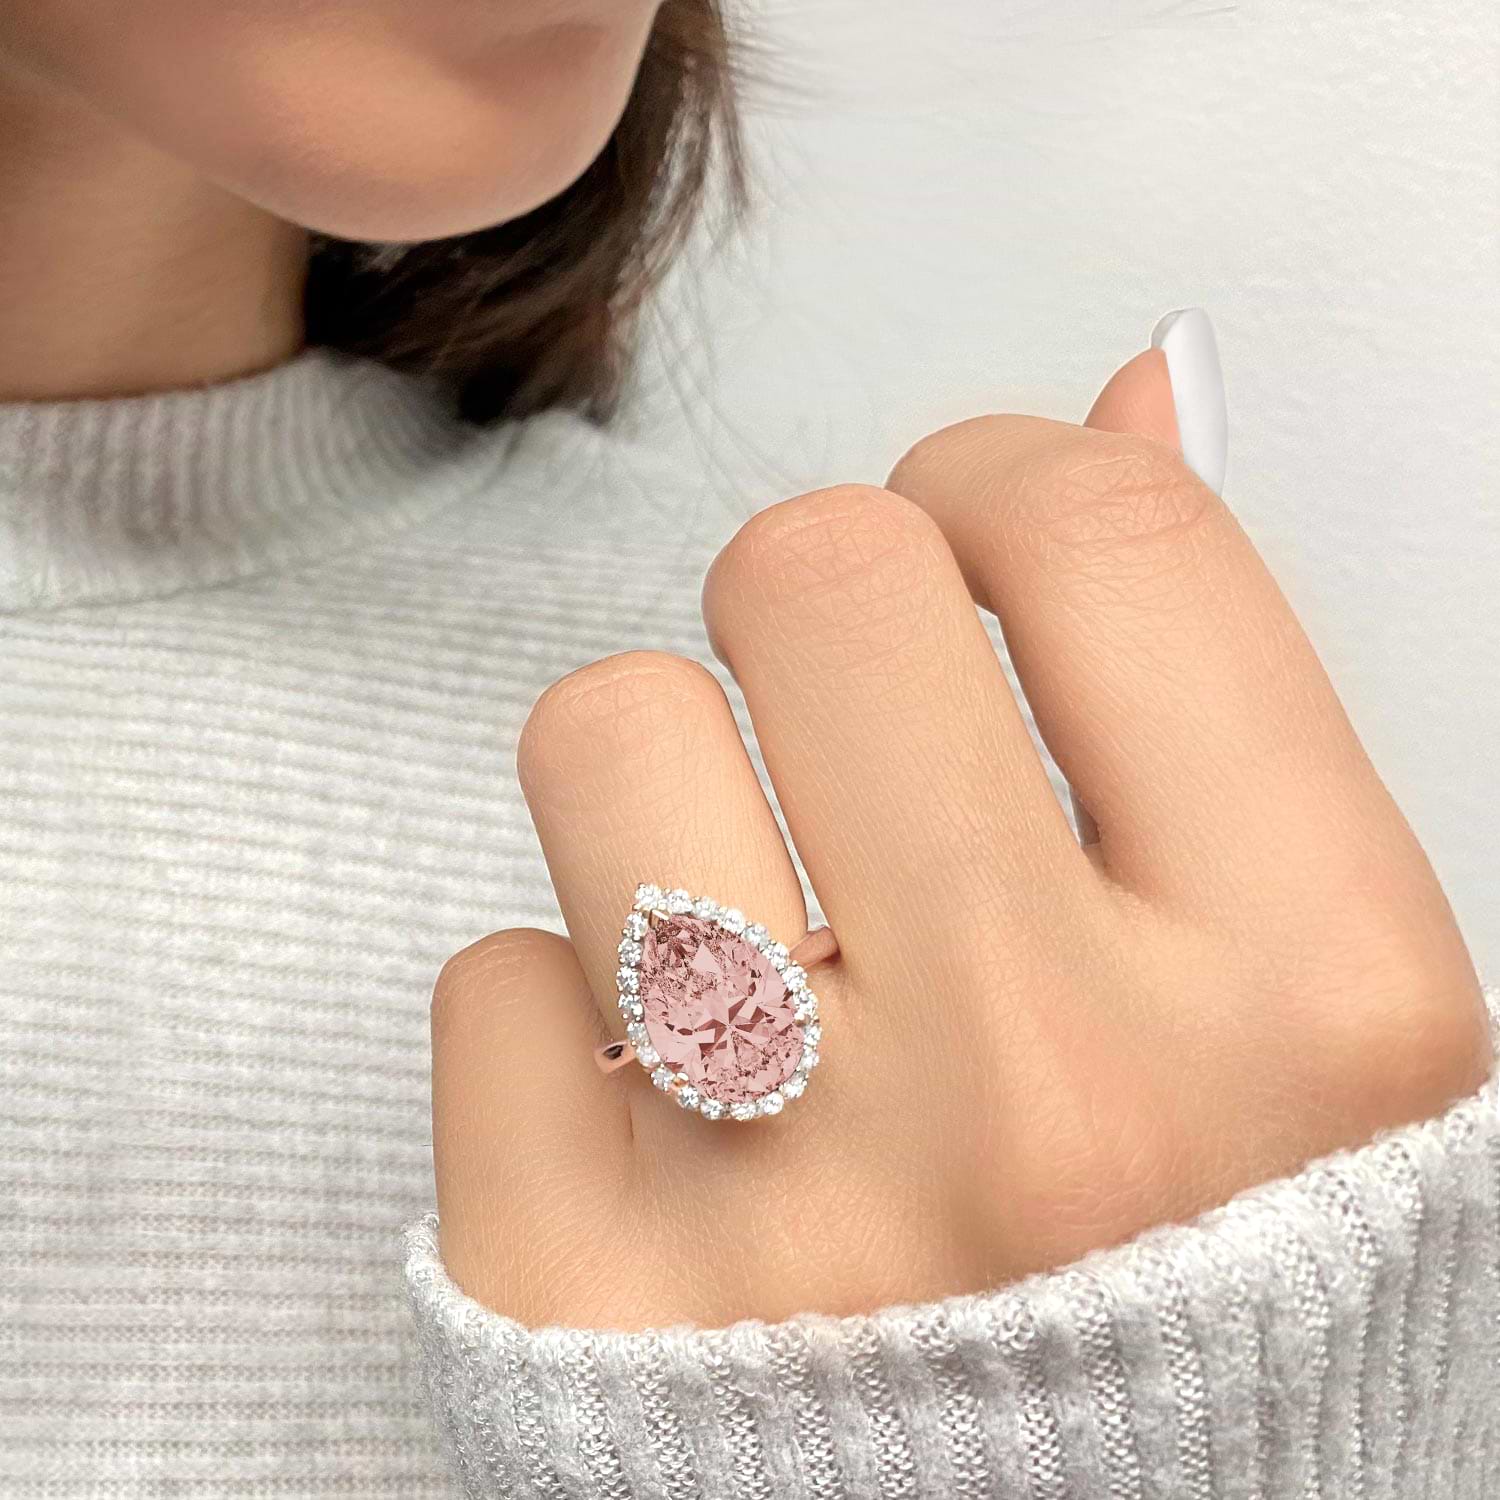 Pear Cut Halo Morganite & Diamond Engagement Ring 14K Rose Gold 4.74ct